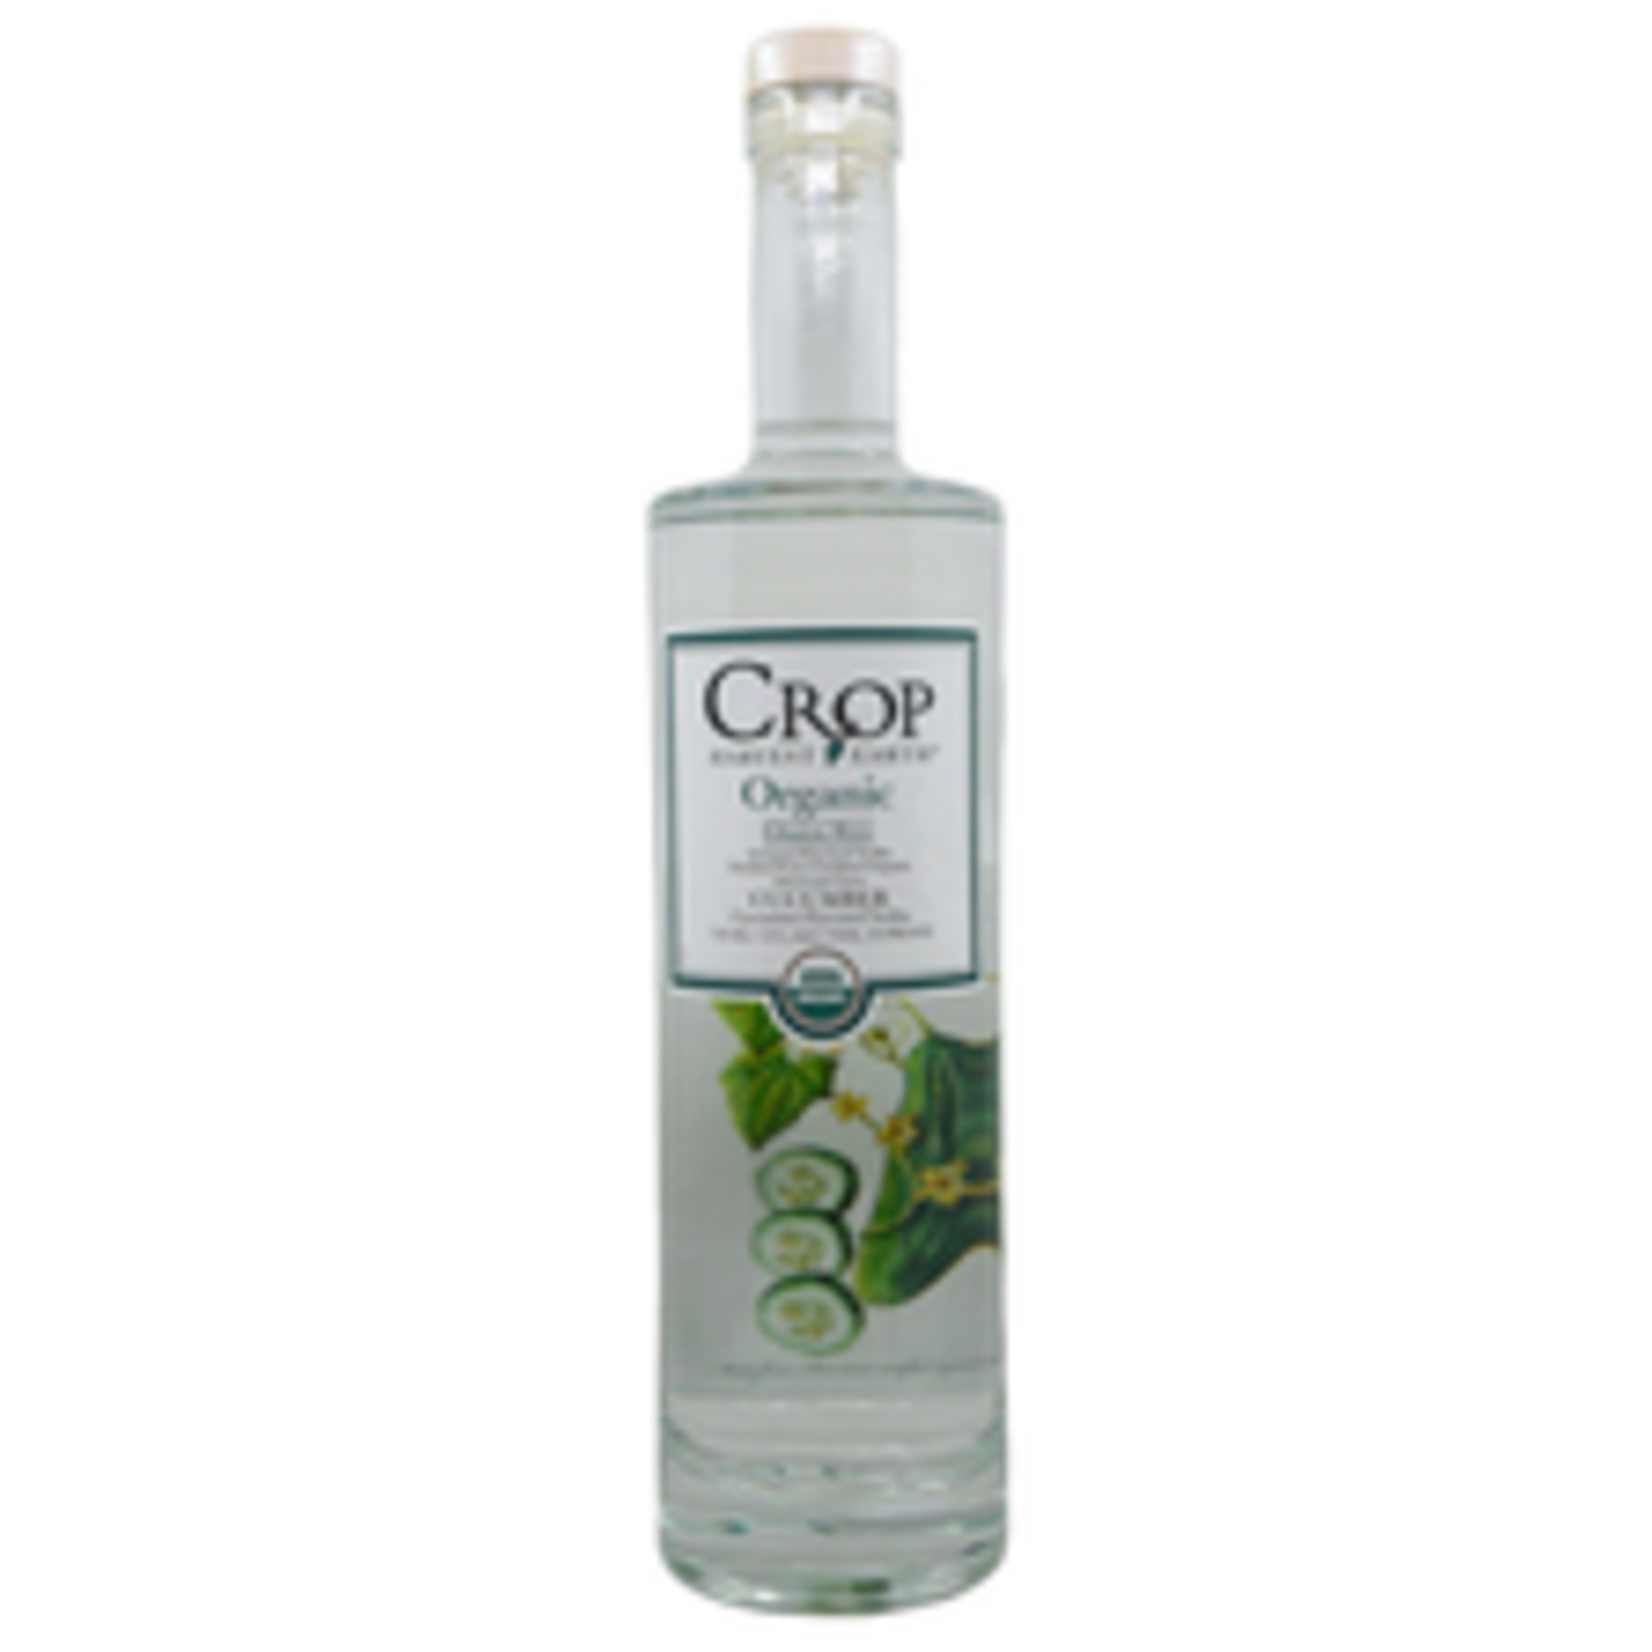 Spirits Crop Harvest Earth Company, Cucumber Artisanal Flavored Vodka 70 Proof